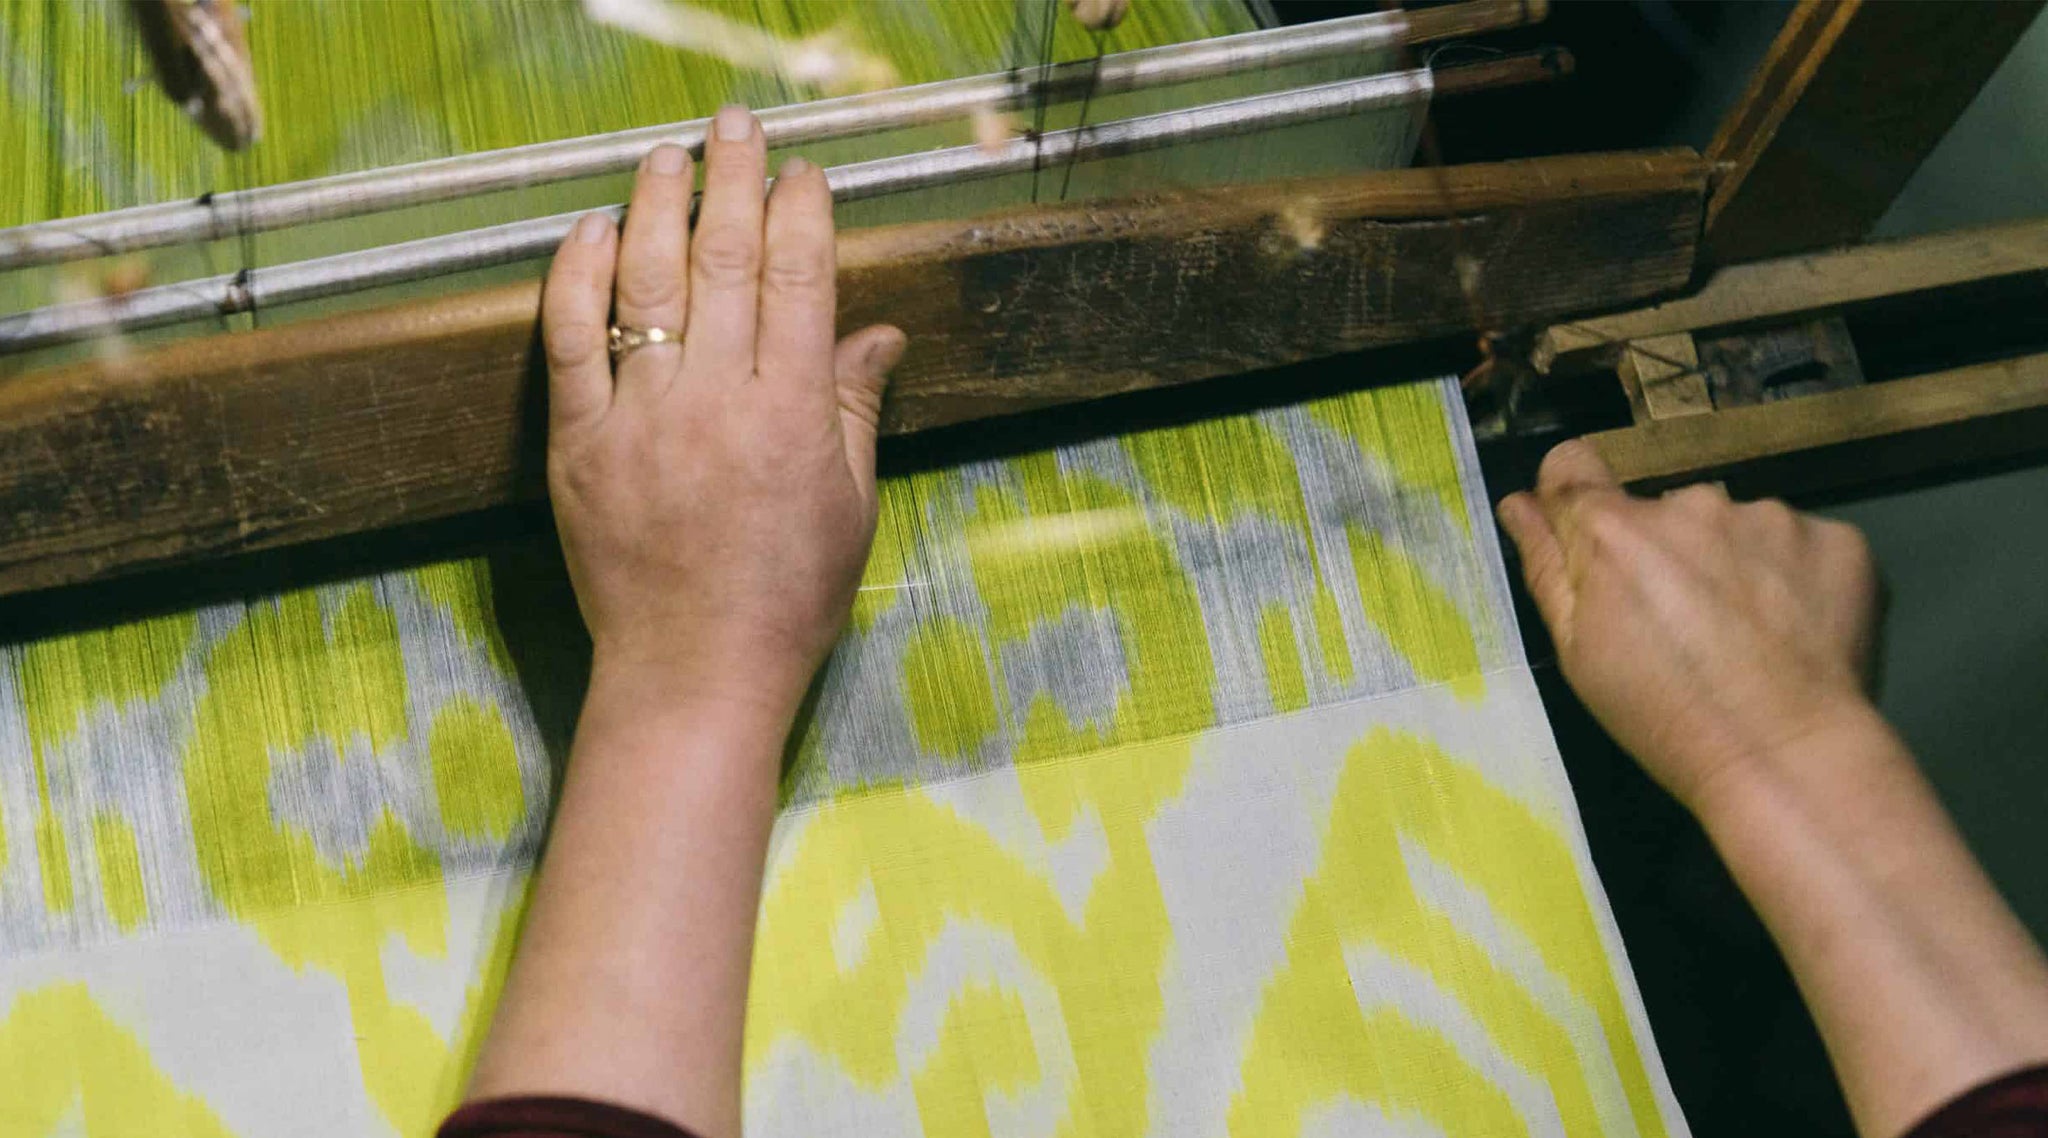 zazi-vinatge-artisanal-partner-weaving-yellow-ikat-pattern-hands